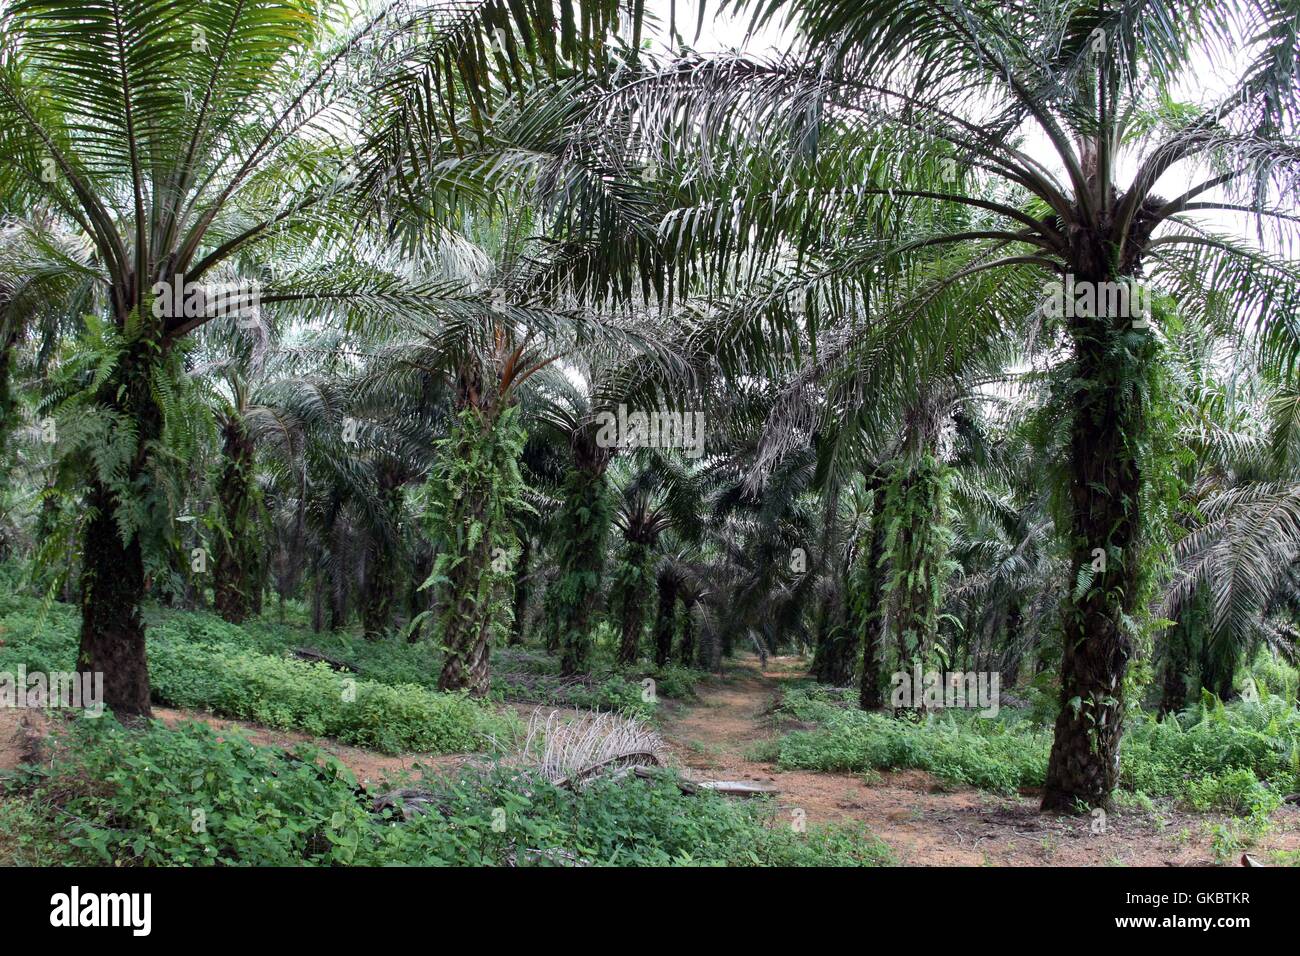 A view of palm fruit in Bintan island, Indonesia. Photo by Yuli Seperi/Alamy Stock Photo